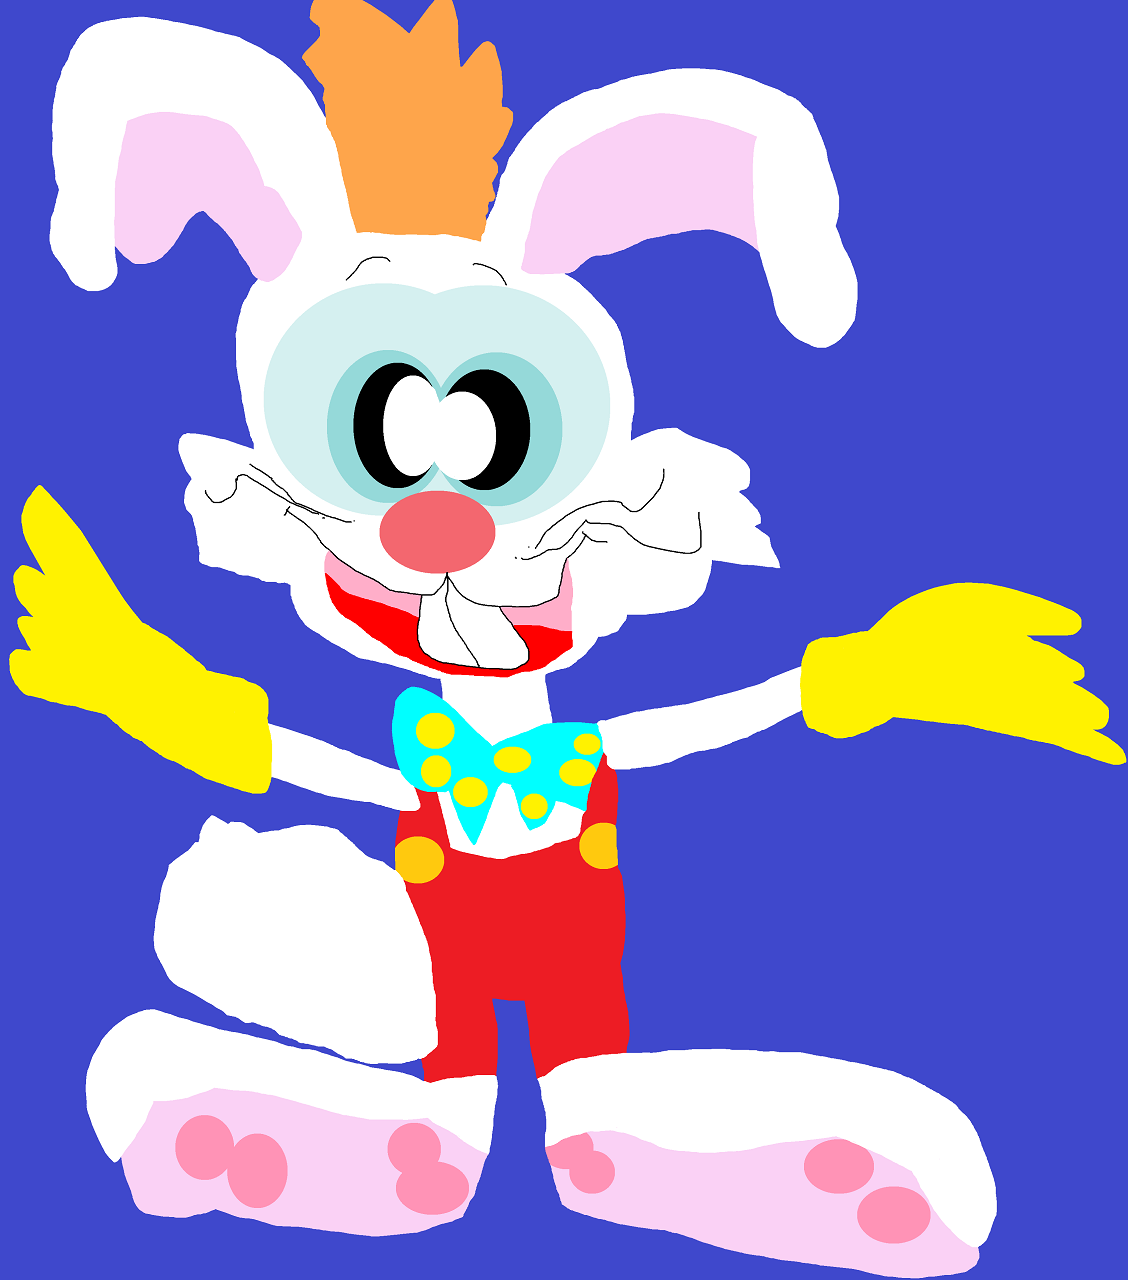 Random Chibi Roger Rabbit by Falconlobo